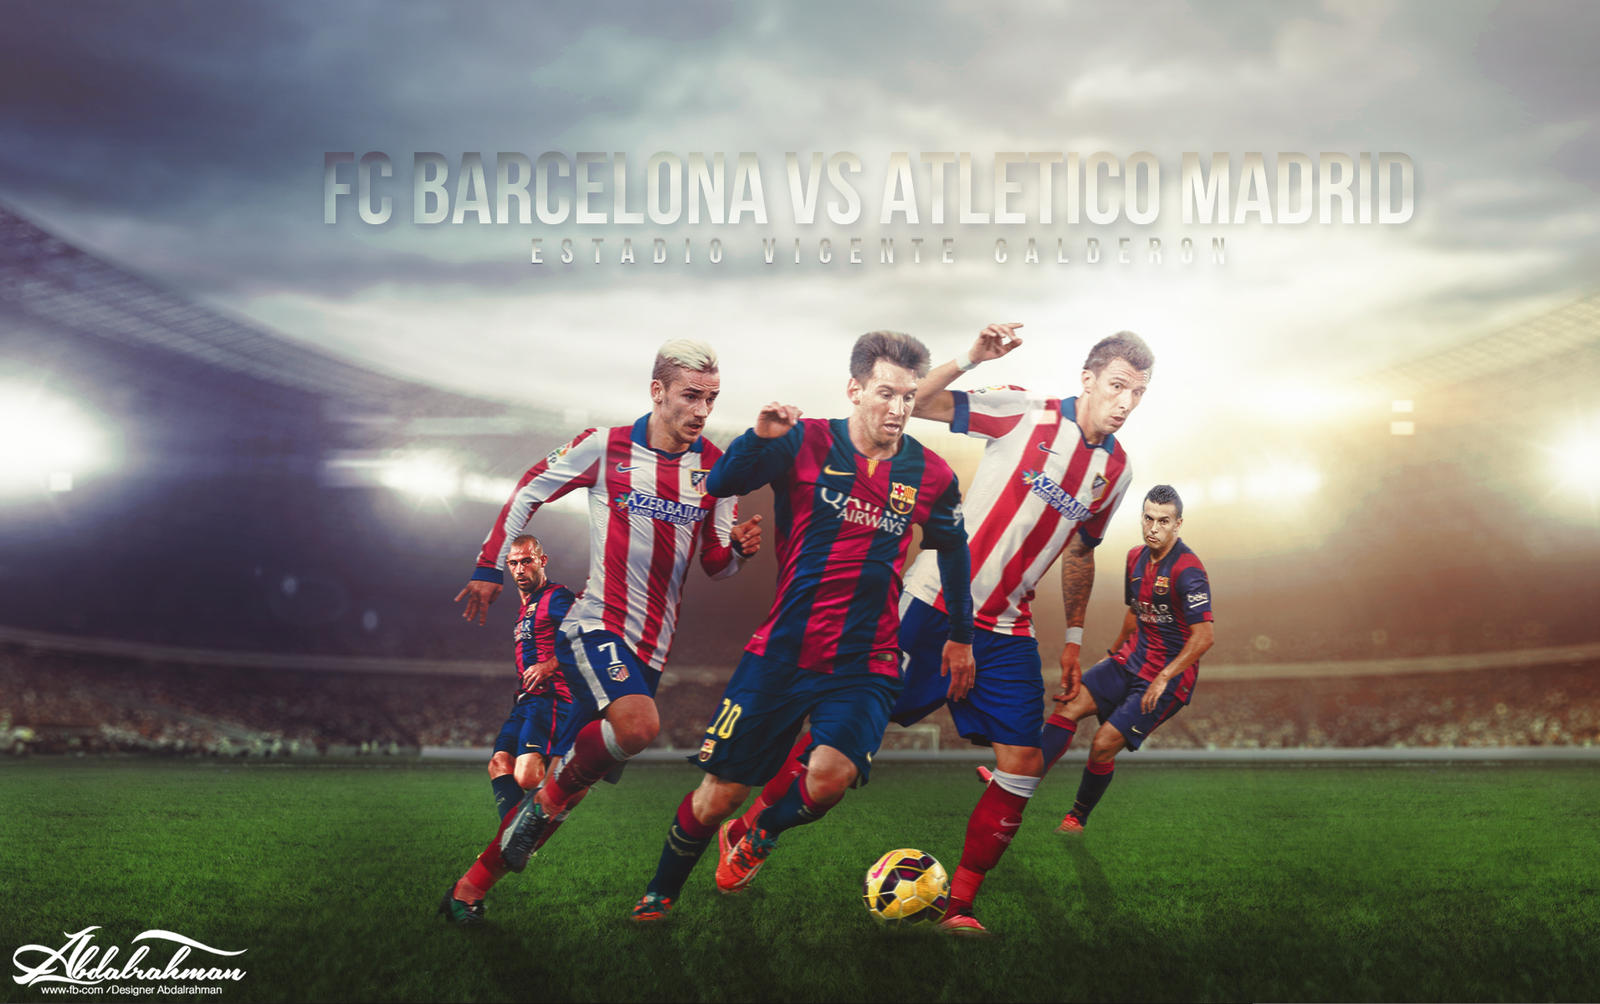 barcelona vs atletico madrid 2015-2016 by Designer-Abdalrahman on ...